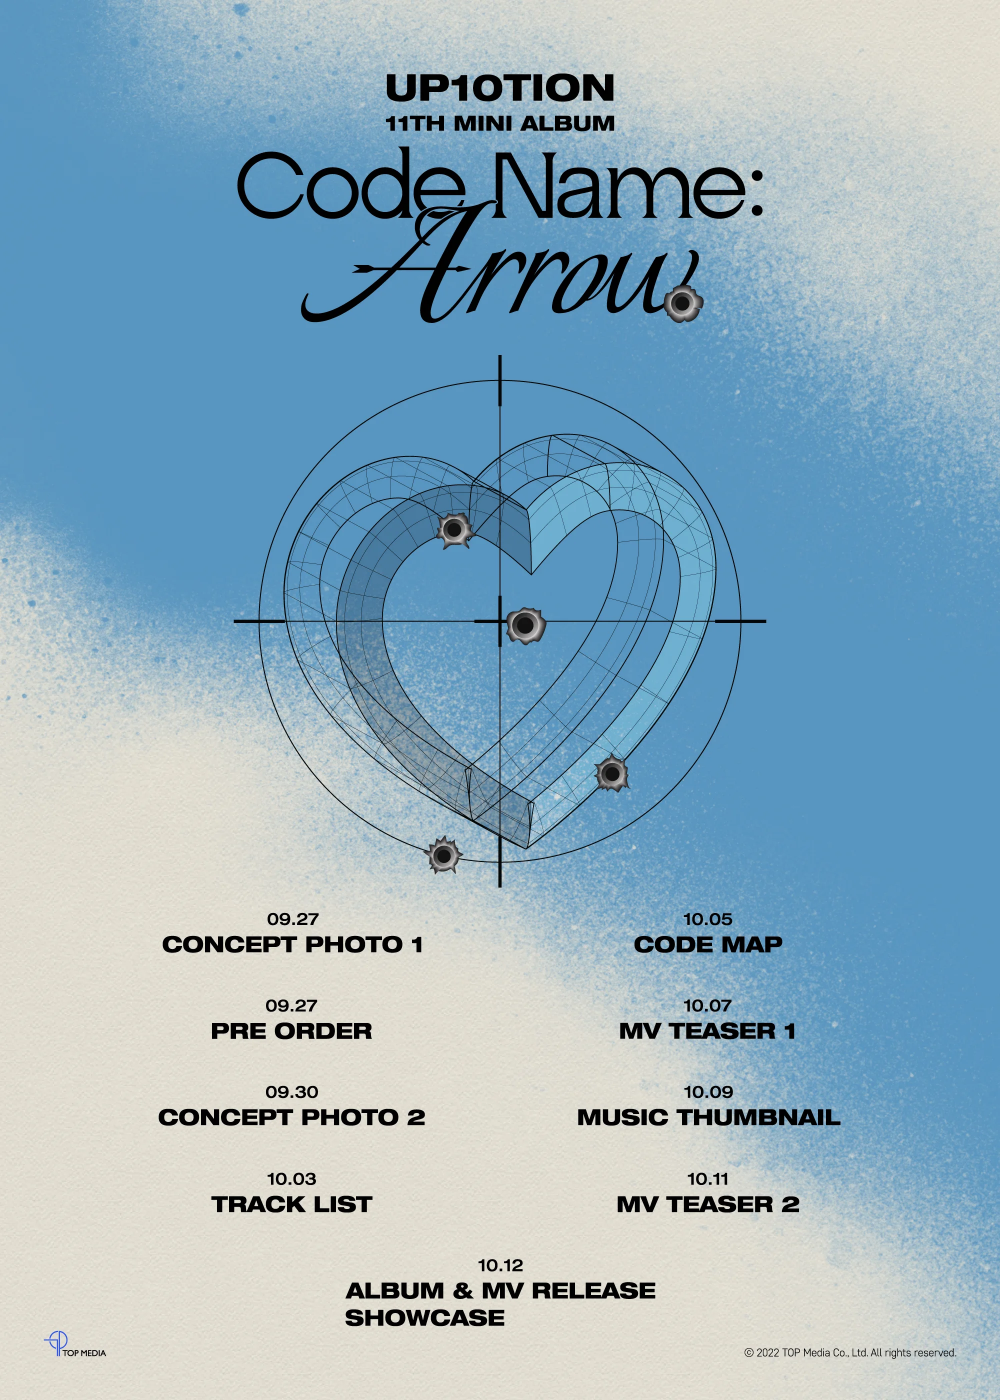 [Камбэк] UP10TION мини-альбом «Code Name: Arrow»: клип «What If Love»